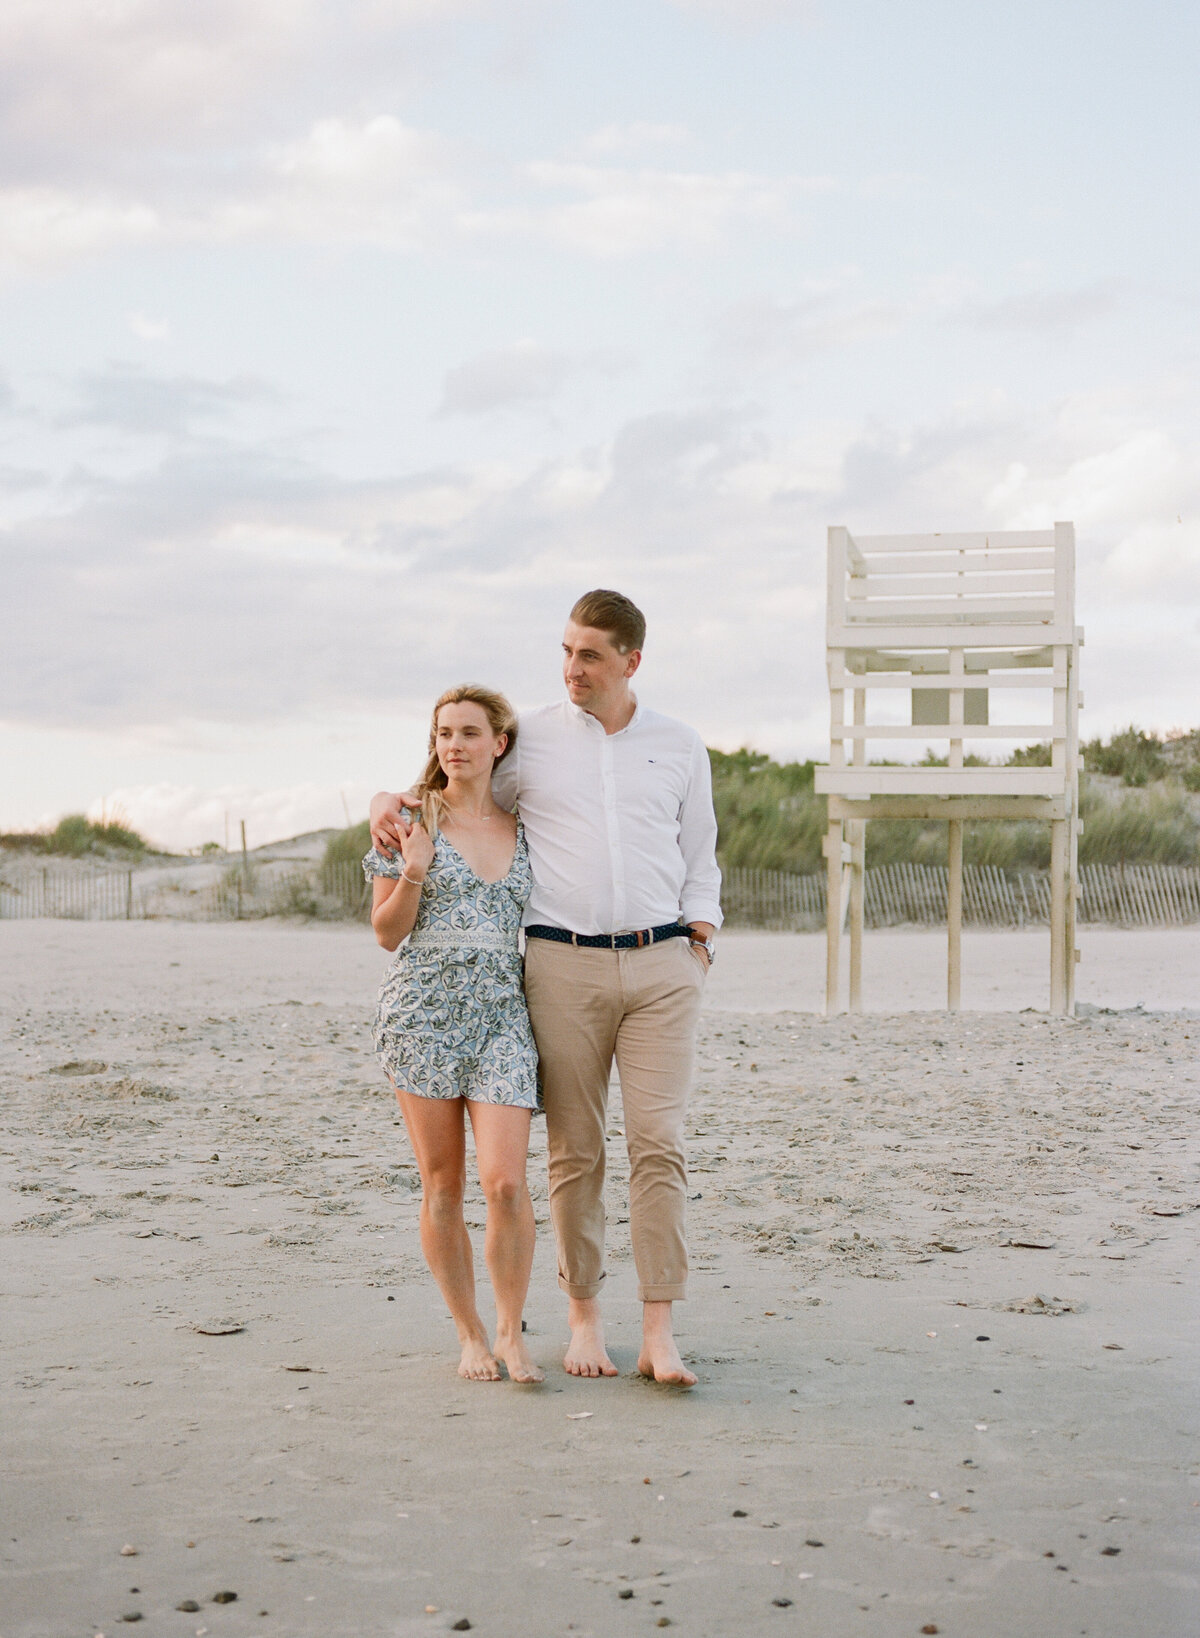 Mackenzie & Sean's RI beach engagement session by Stephanie Vegliante